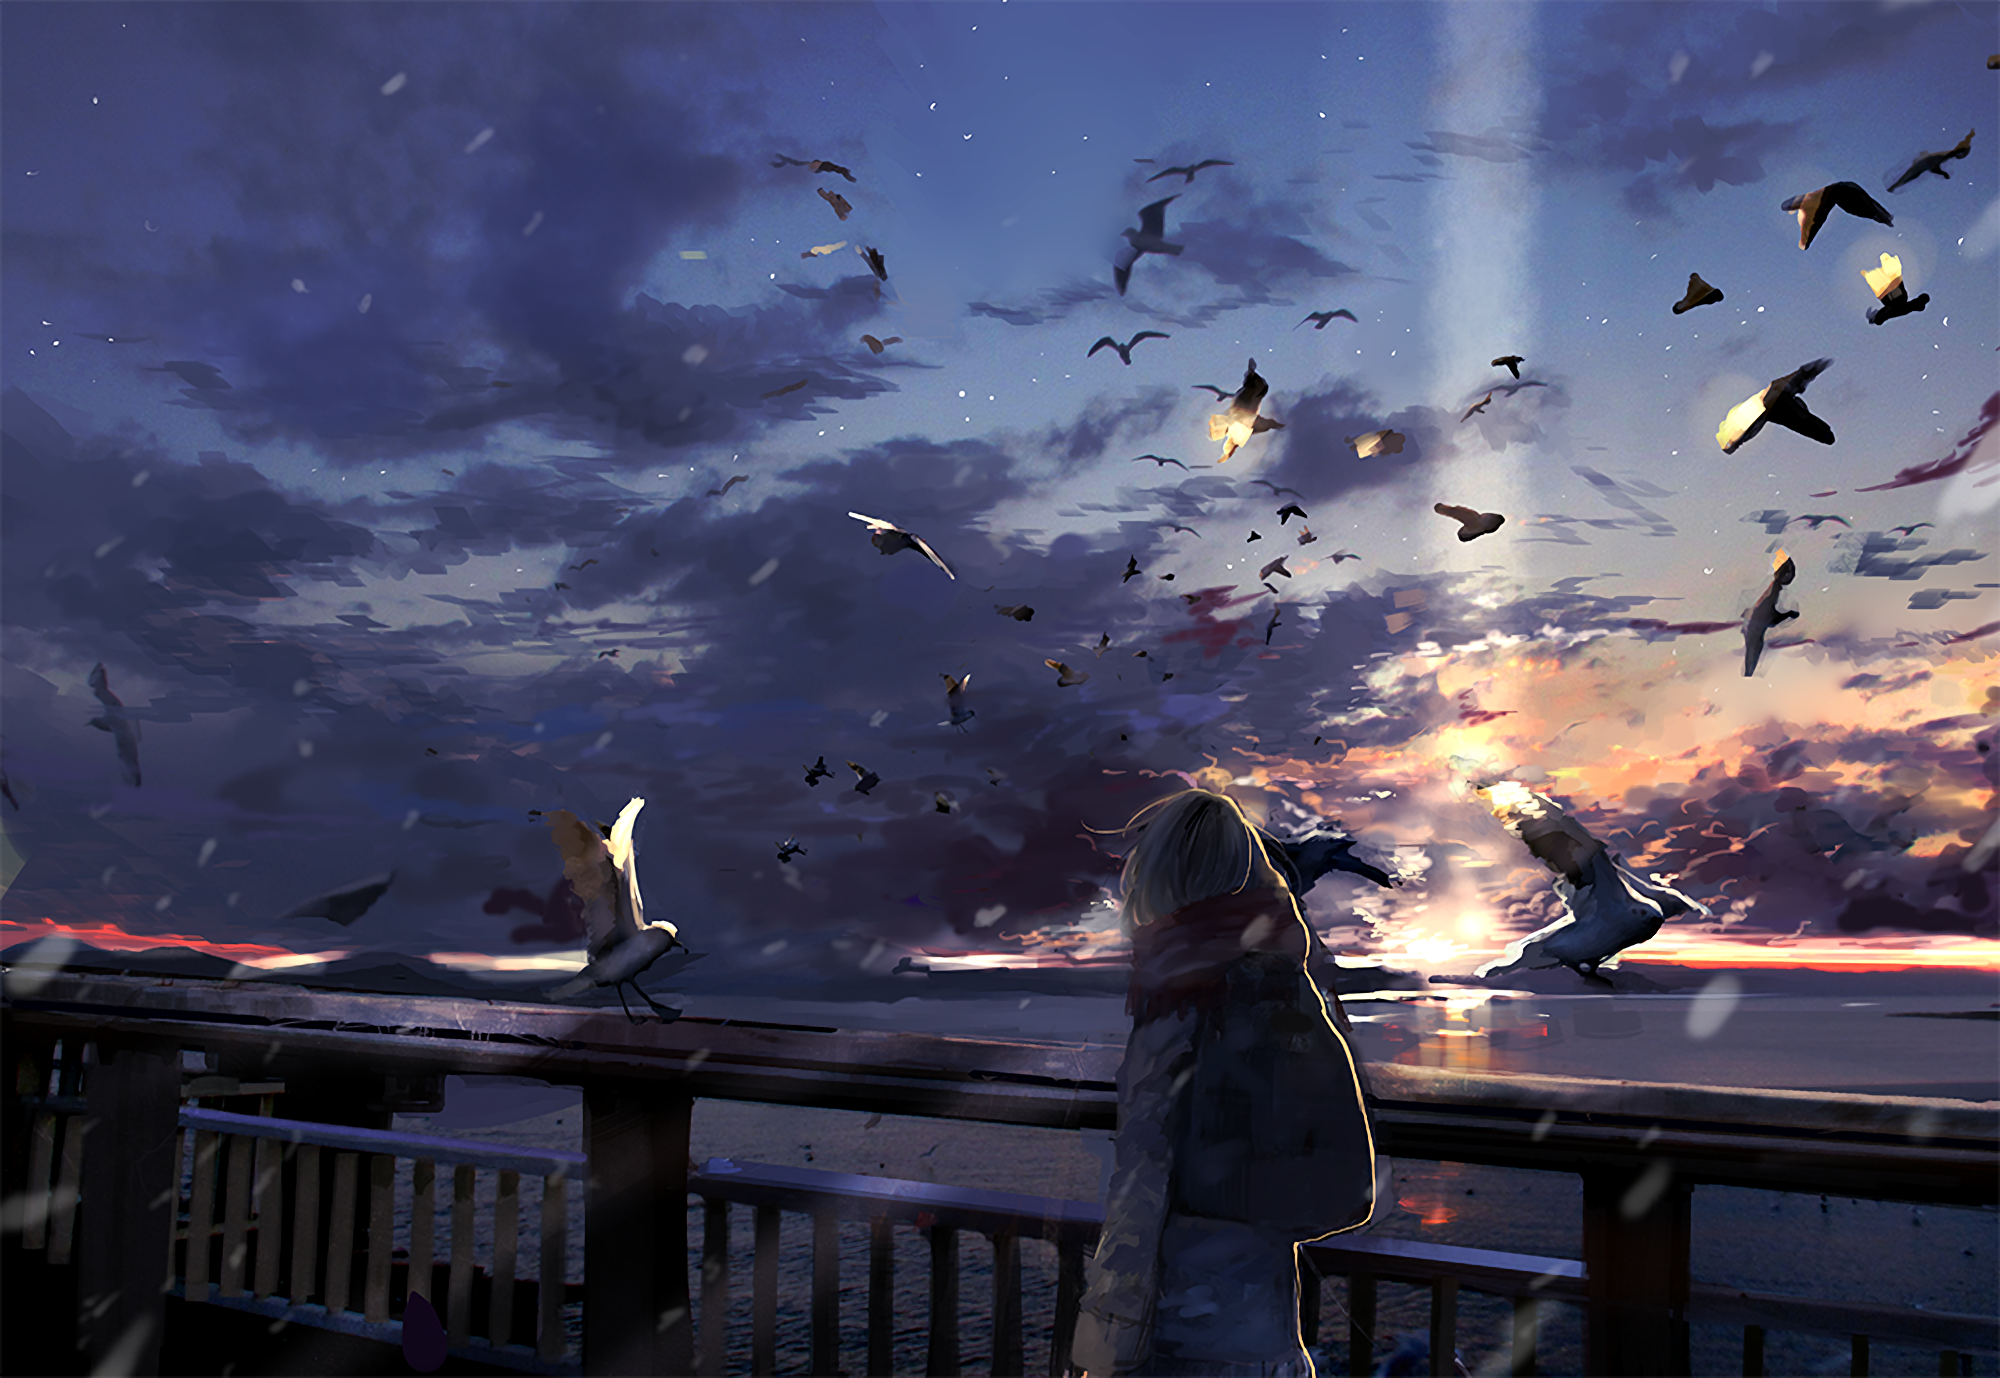 Anime Sky Sunset Wallpapers